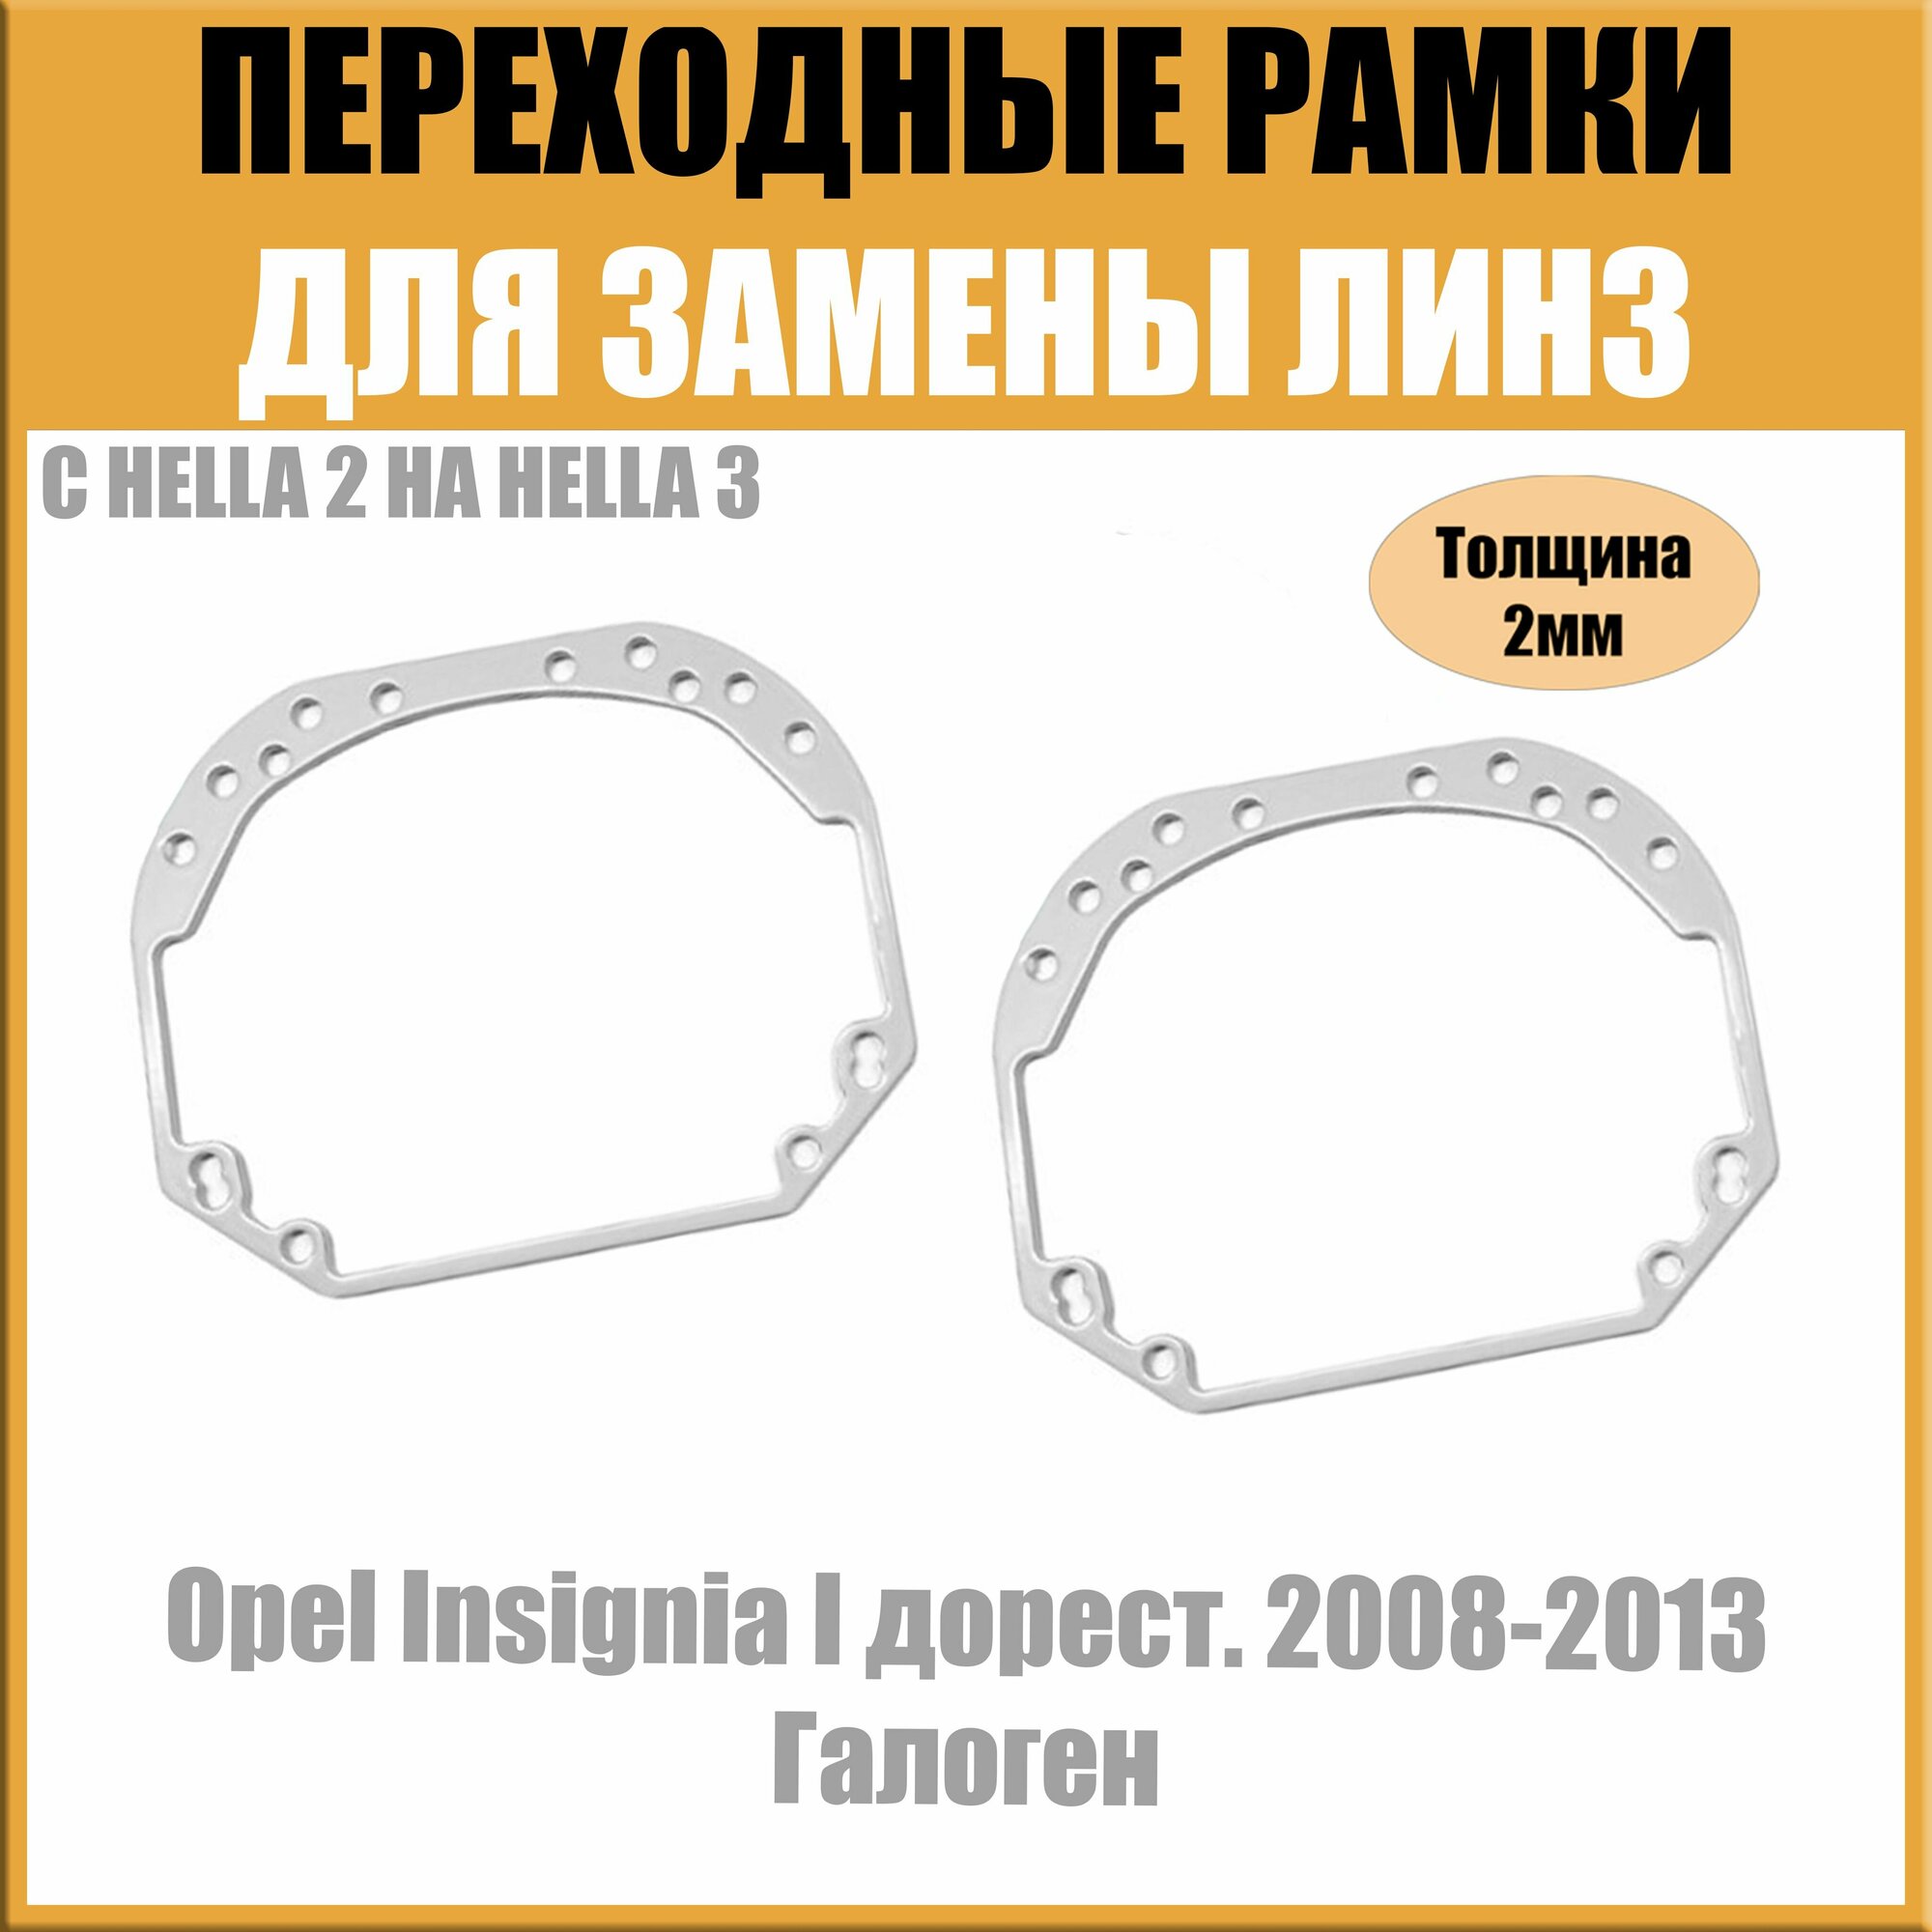 Переходные рамки для линз №1 на Opel Insignia I дорест. 2008-2013 Галоген под модуль Hella 3R/Hella 3 (Комплект 2шт)